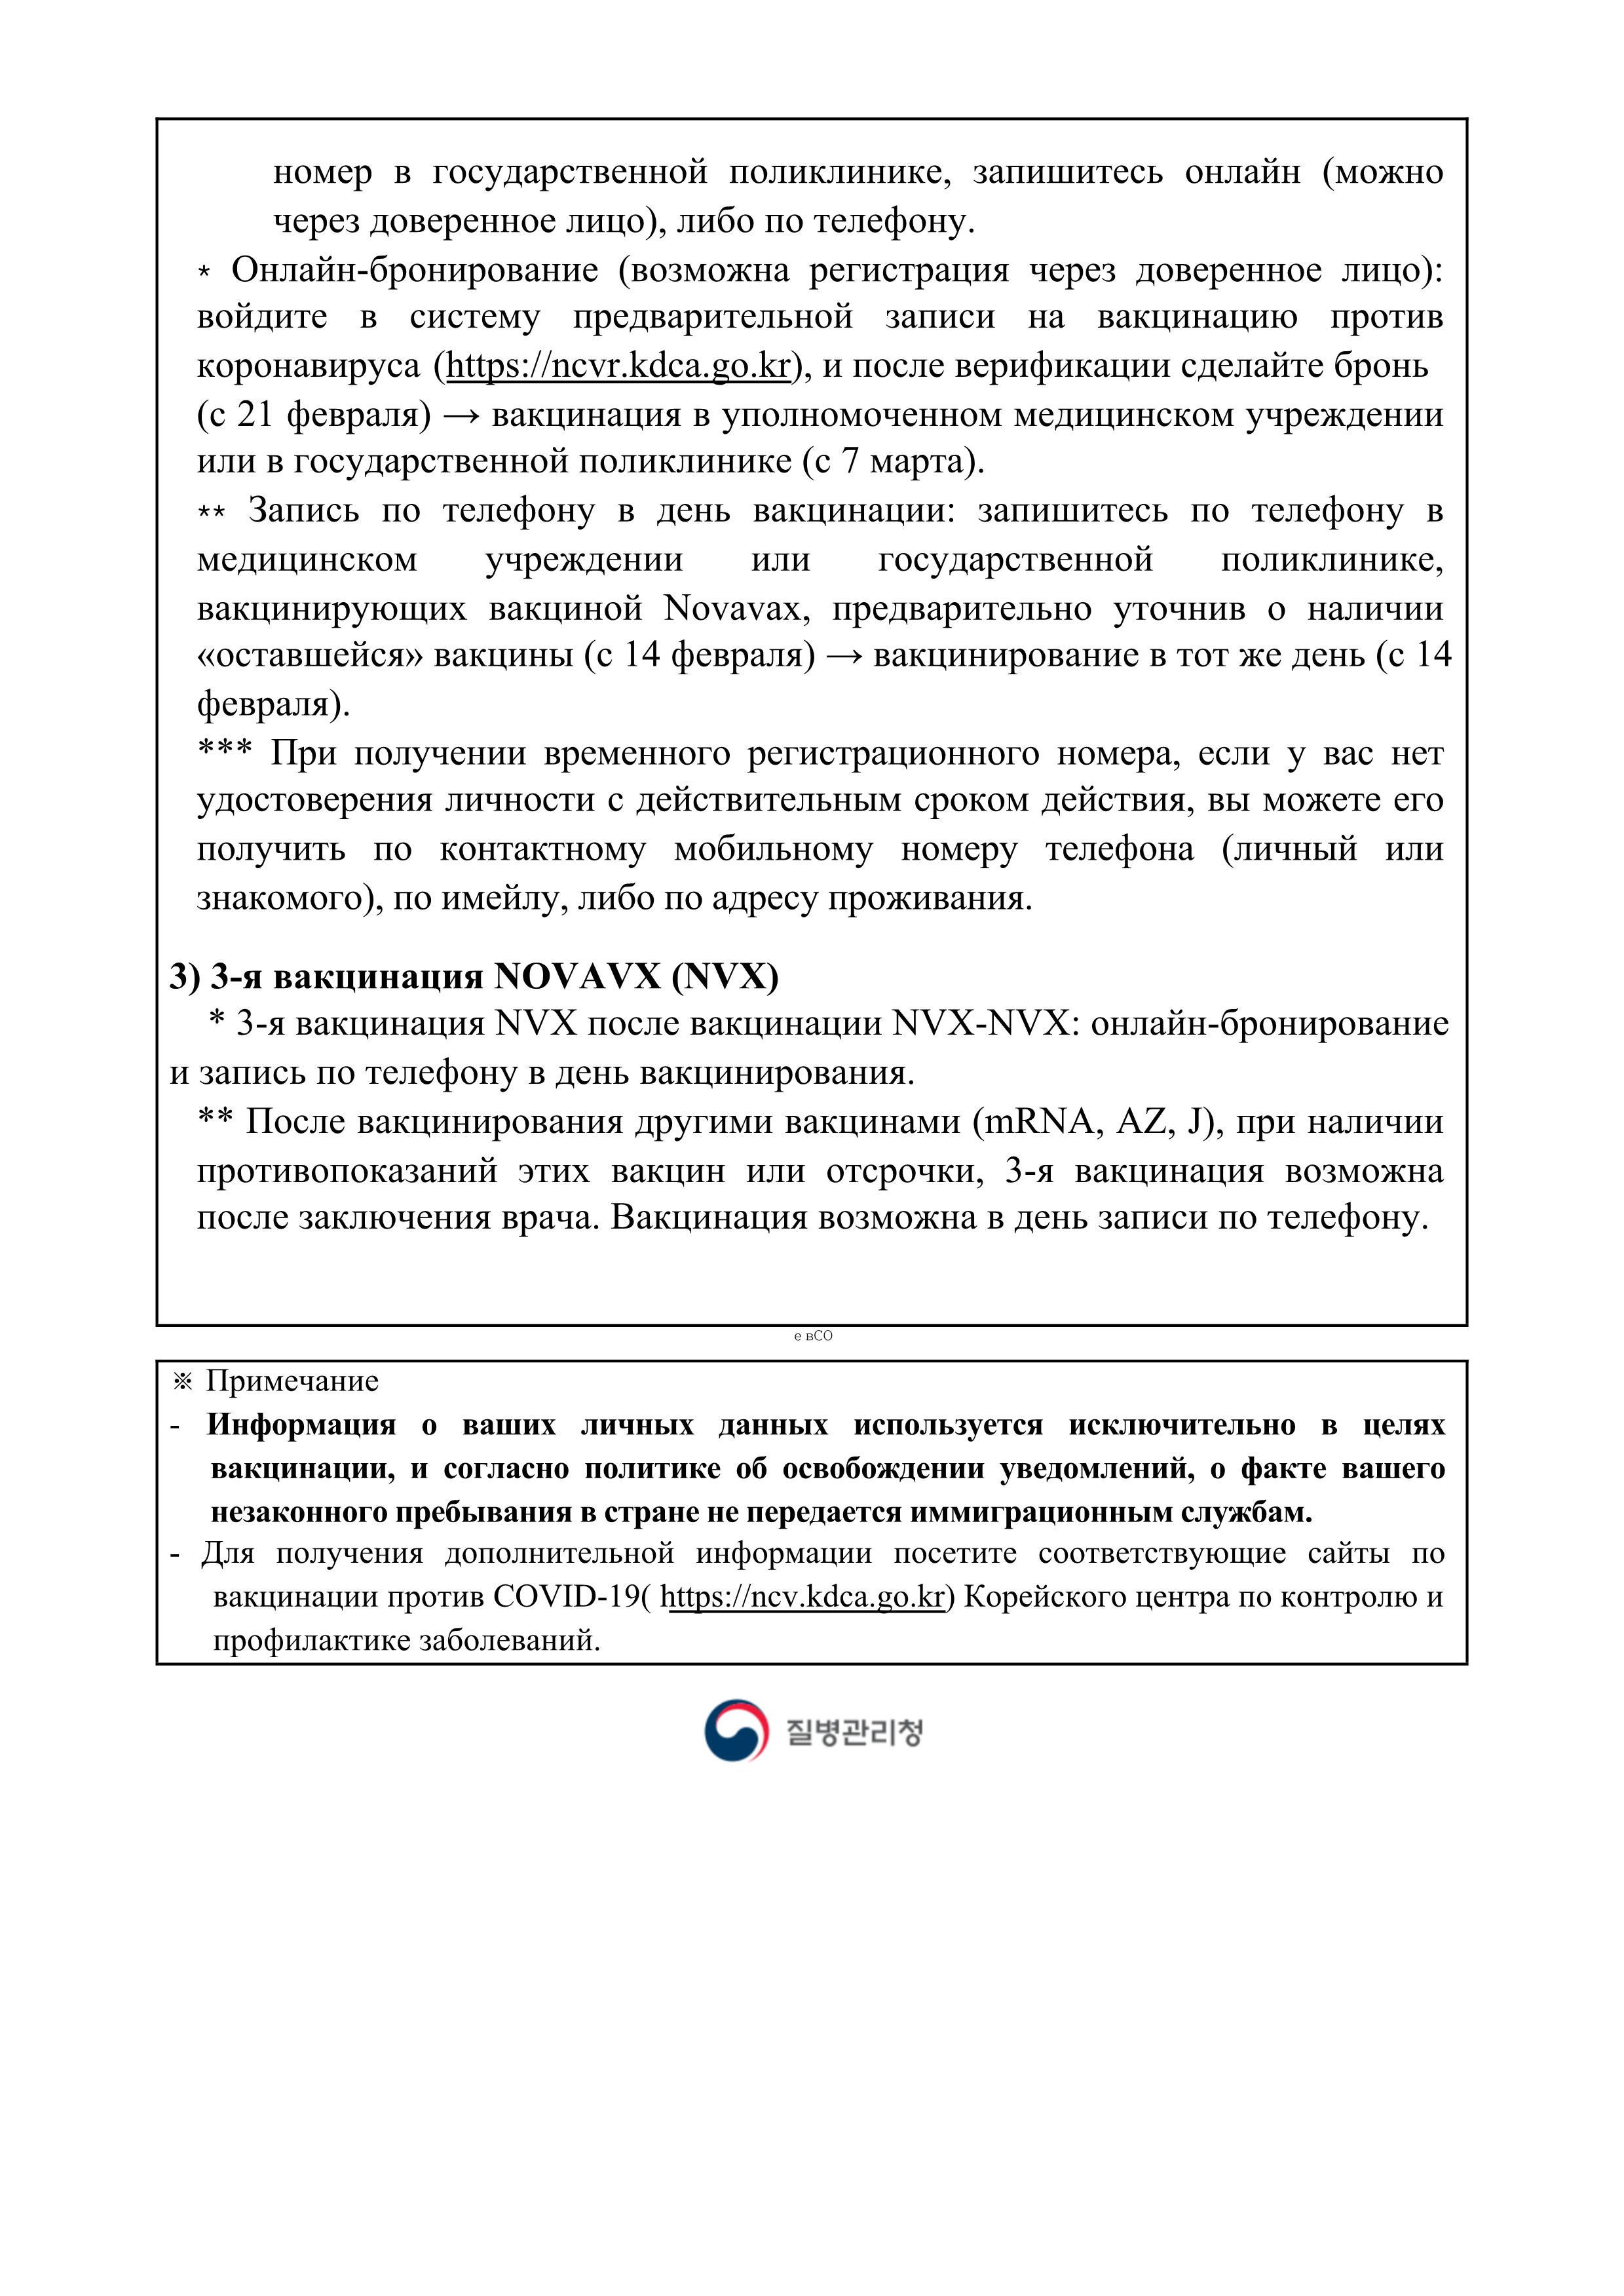 Информация о вакцинации Novavax(Русский, монго́льский и узбе́кский)